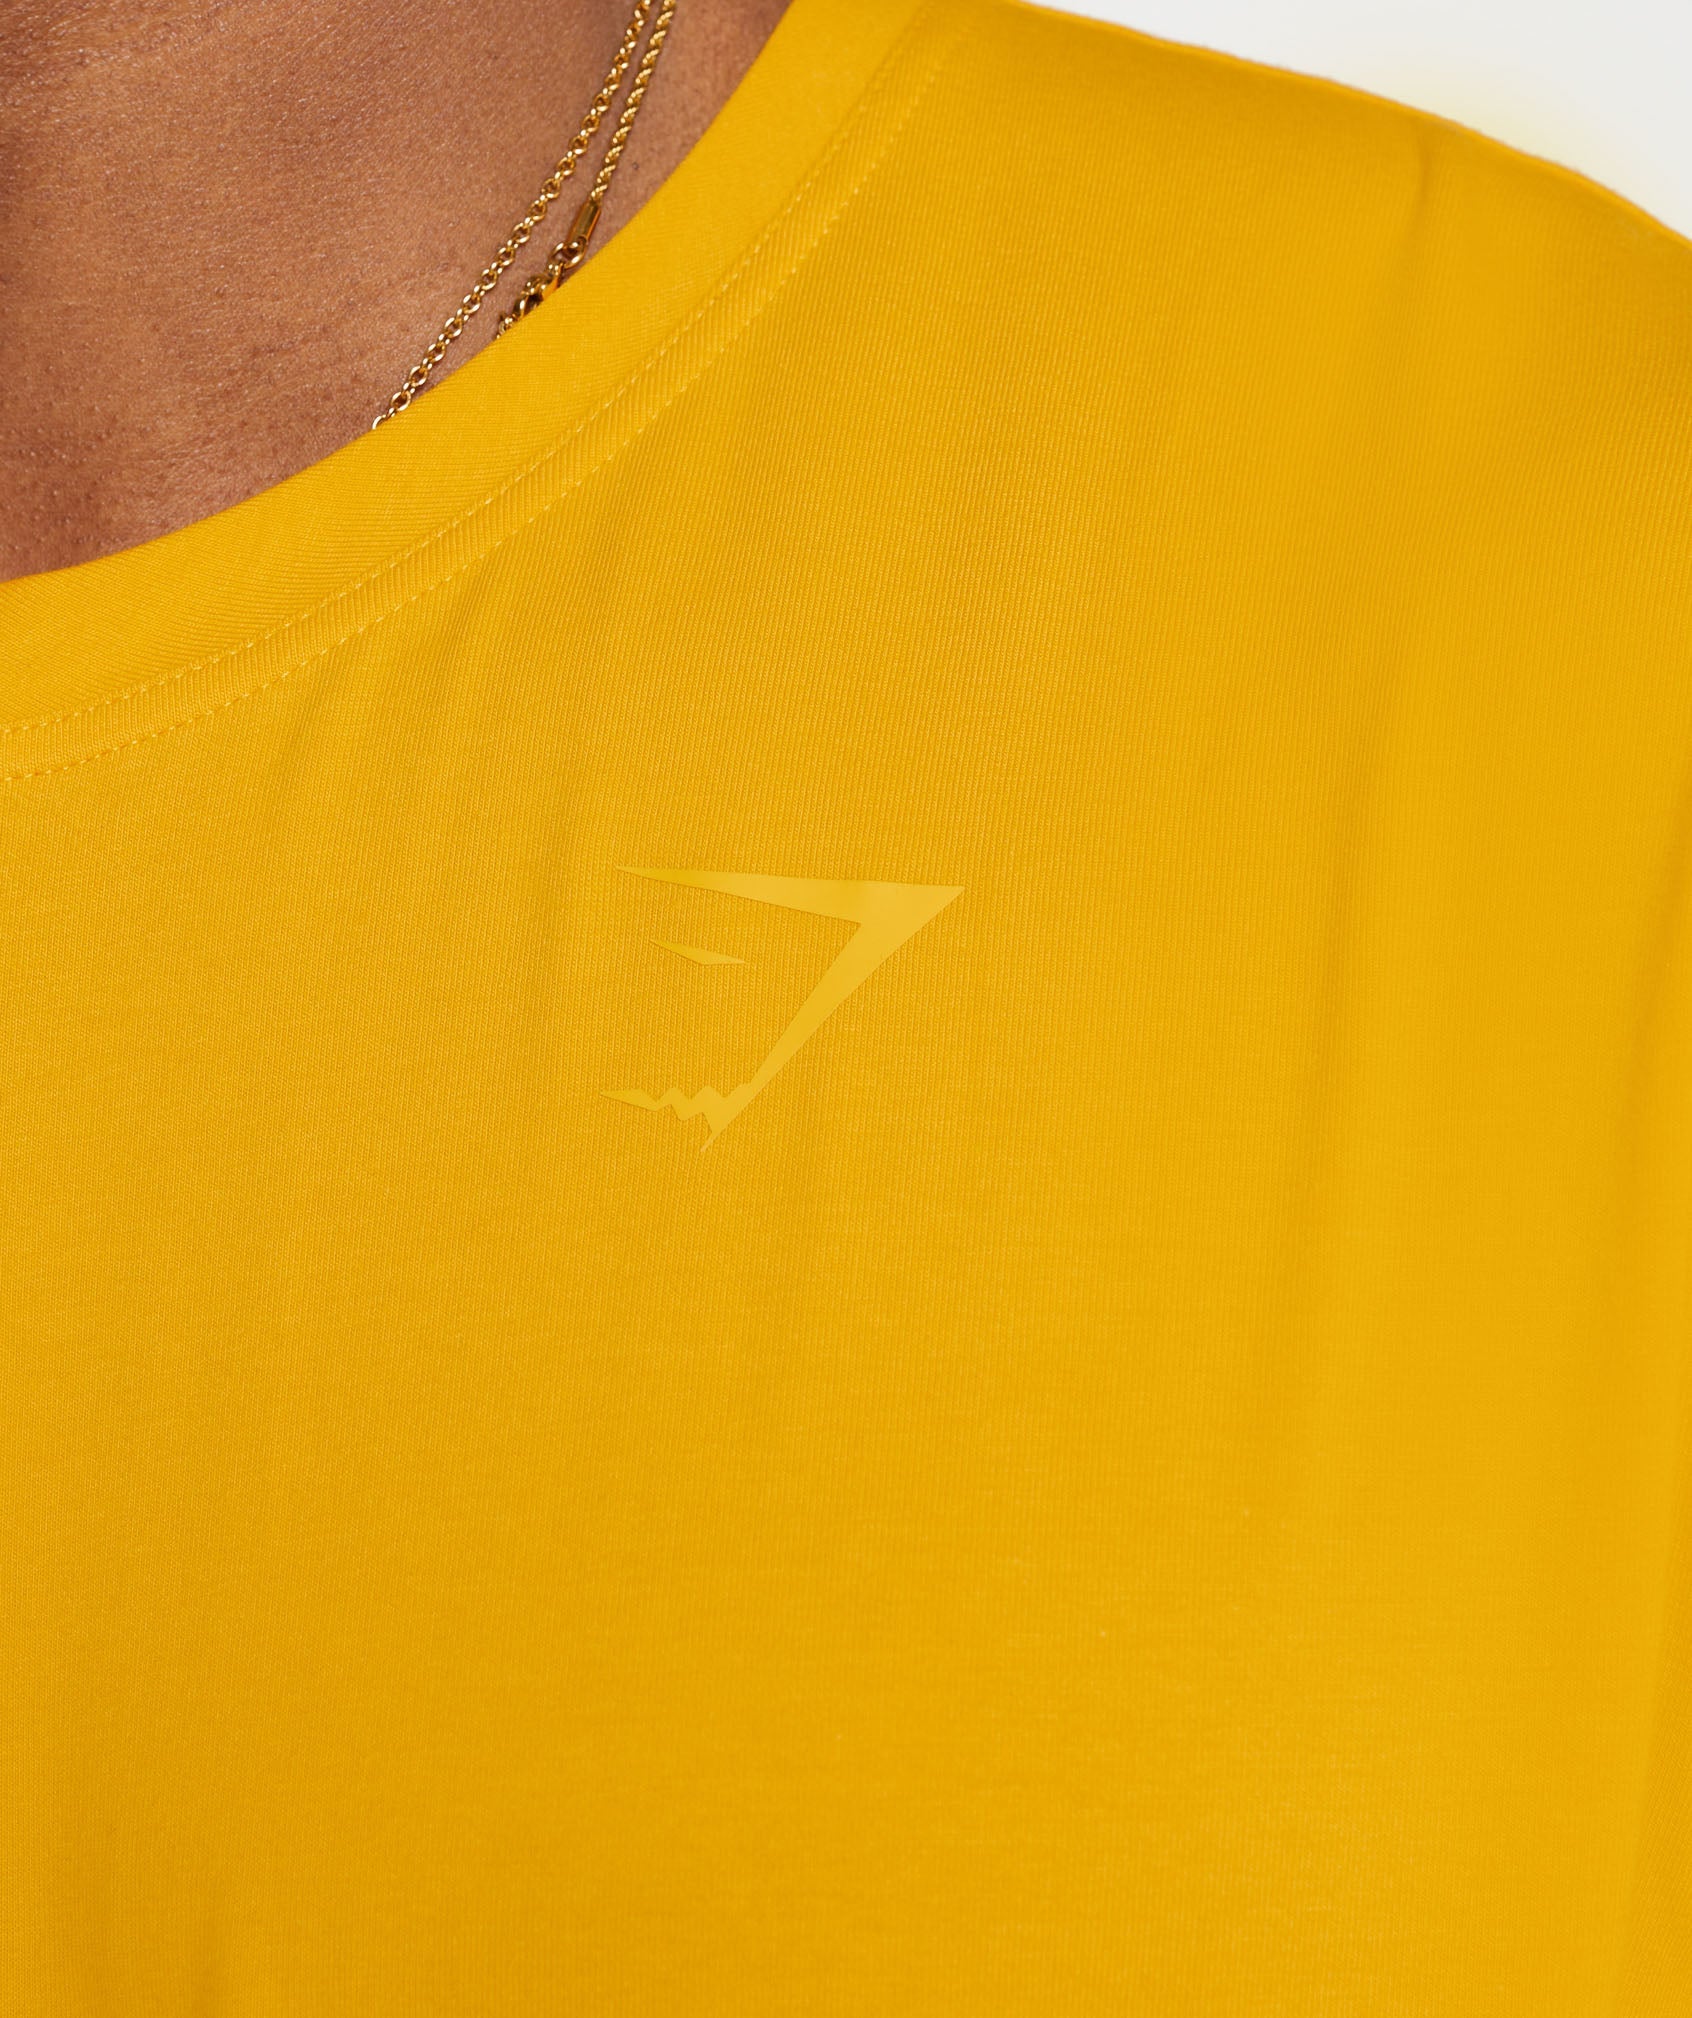 Power T-Shirt in Sunny Yellow